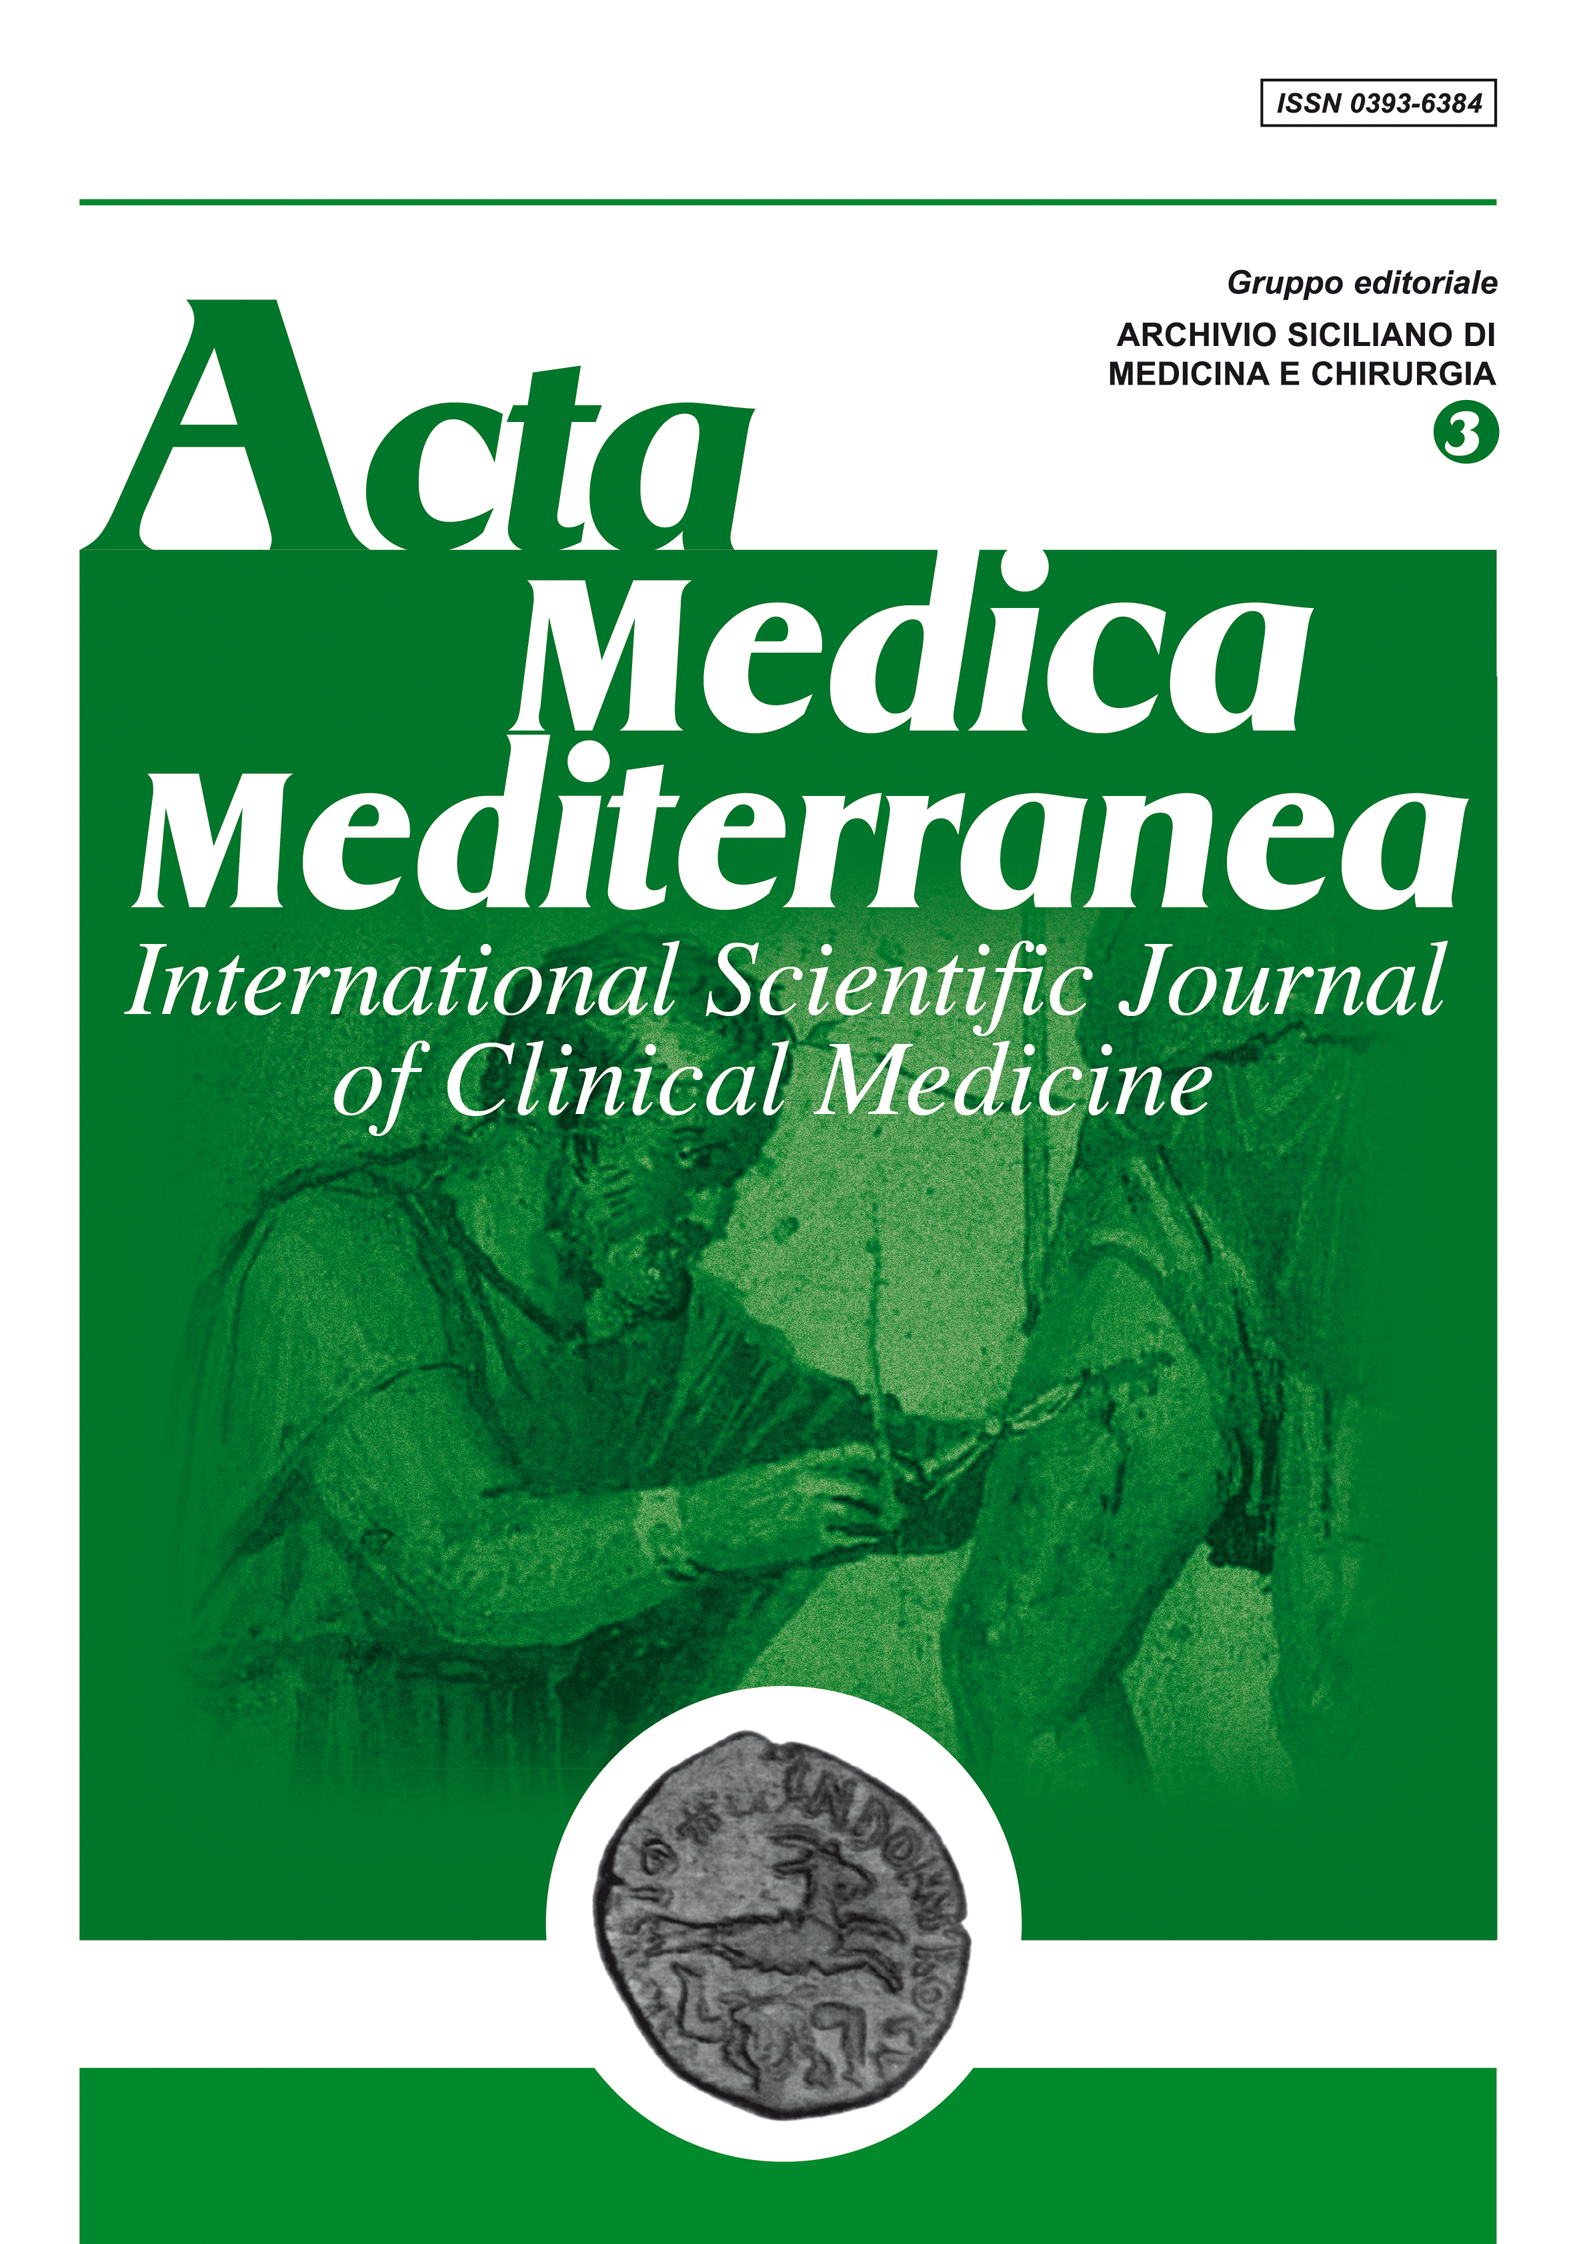 main image homepage acta medica mediterranea